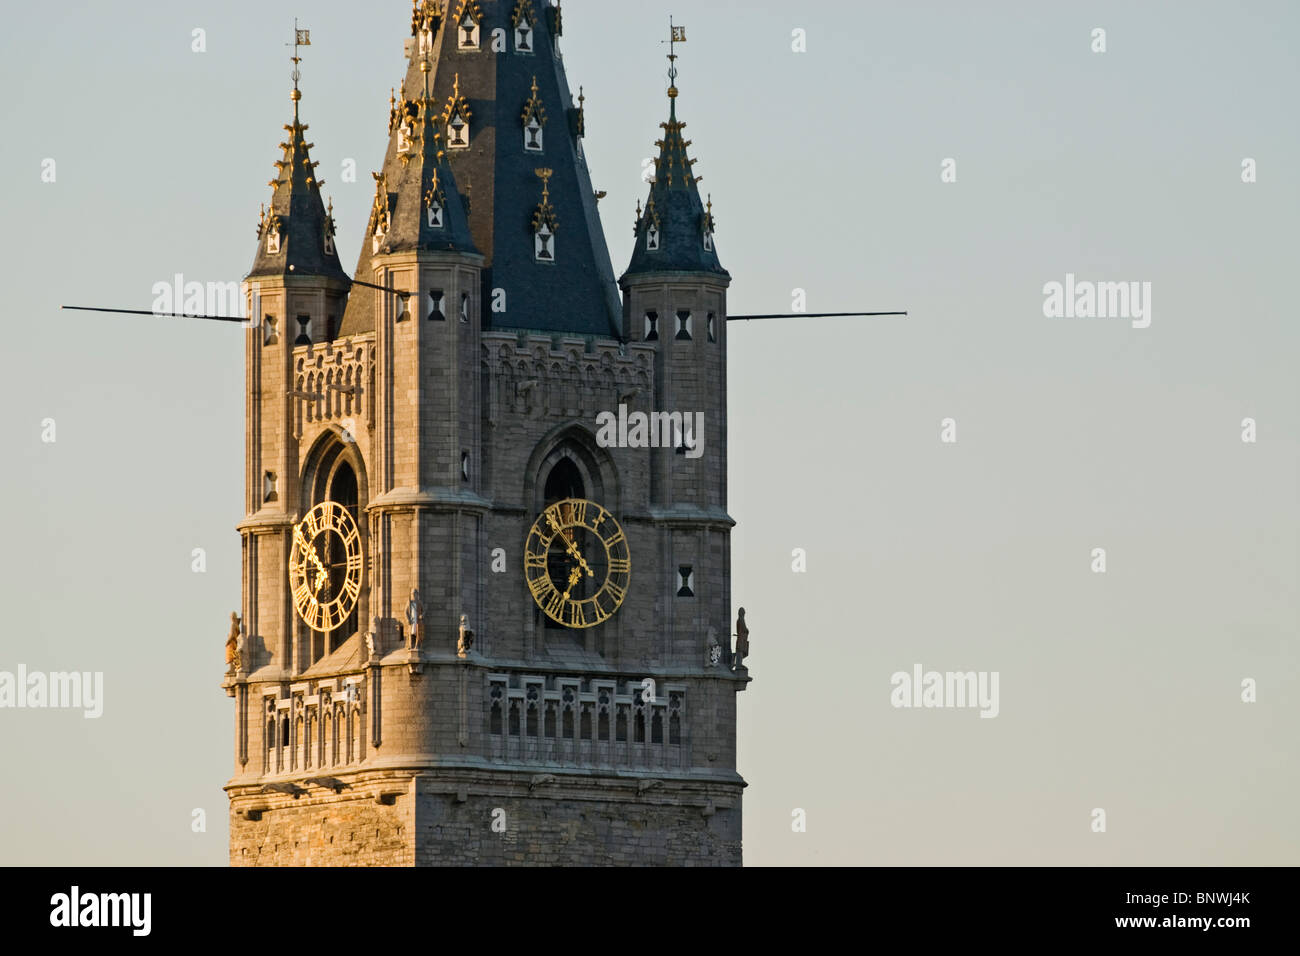 Belgium, Ghent, Belfry tower closeup Stock Photo